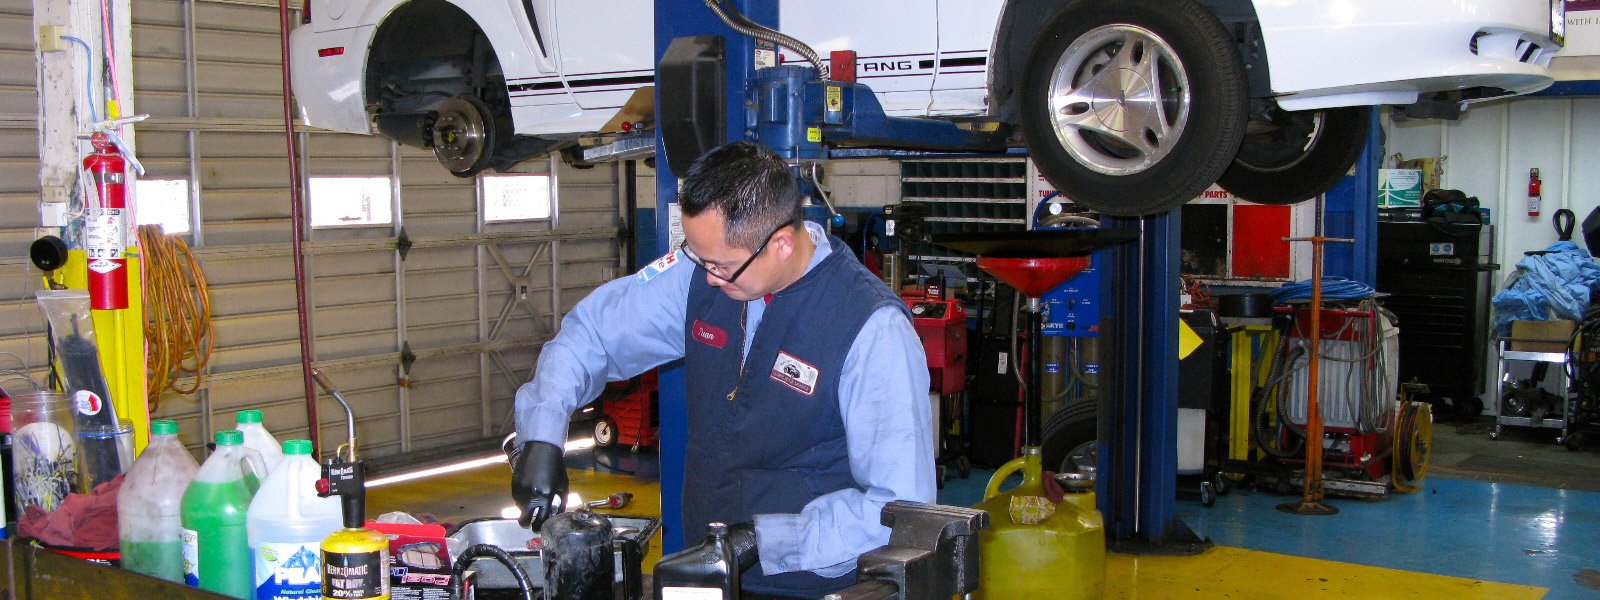 Pacific Motor Service - Monterey, CA, US, auto repair shop